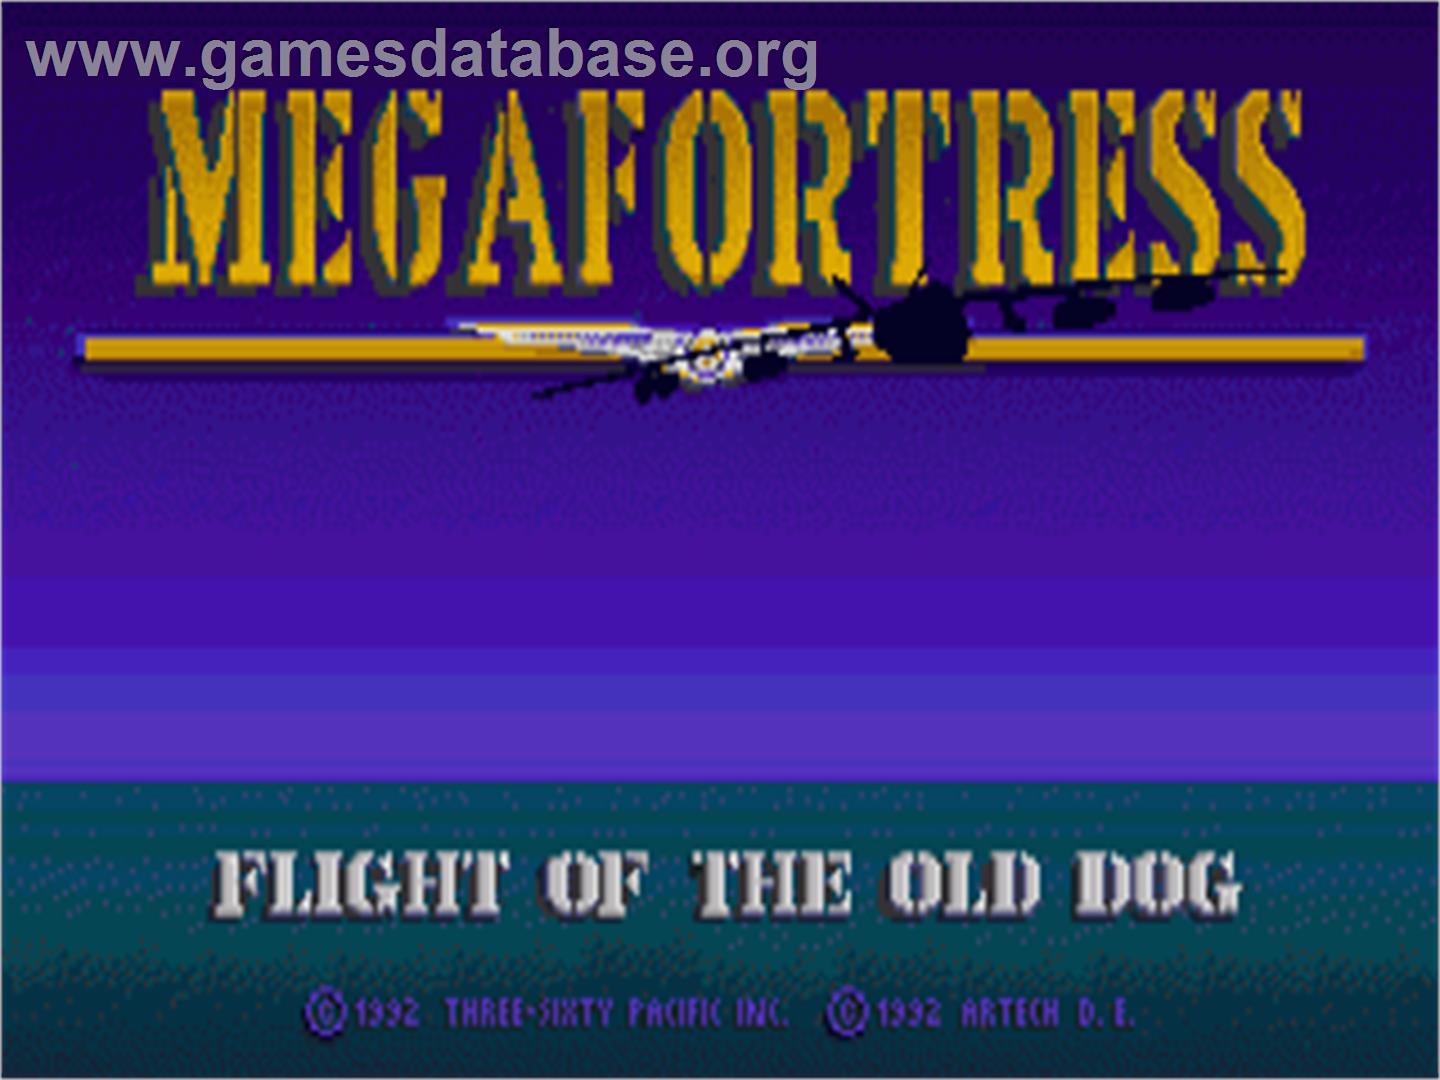 Megafortress - Commodore Amiga - Artwork - Title Screen